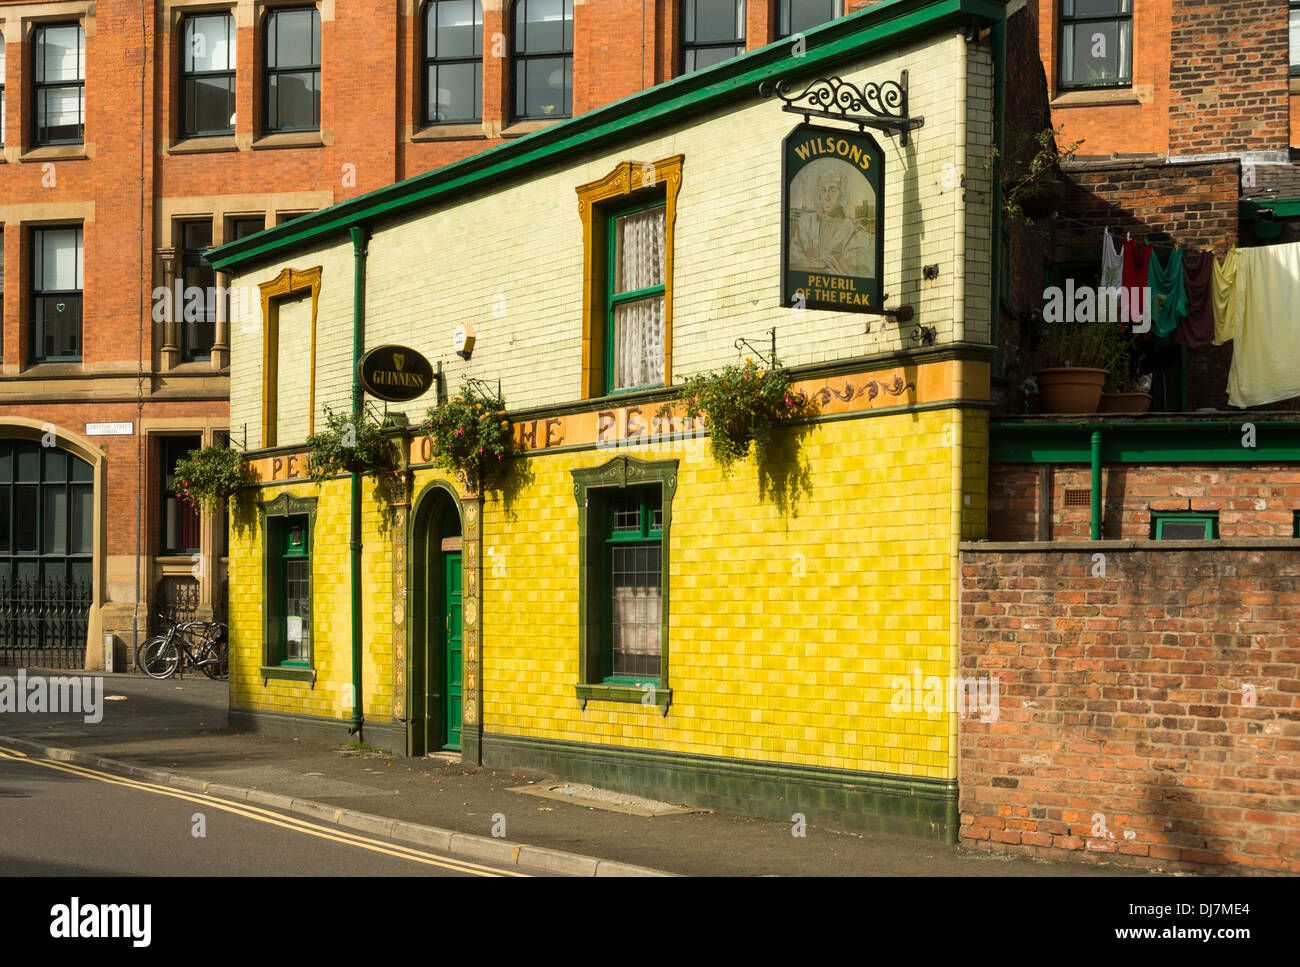 The Peveril of the Peak public house, Great Bridgewater Street, Manchester, England, UK Stock Photo